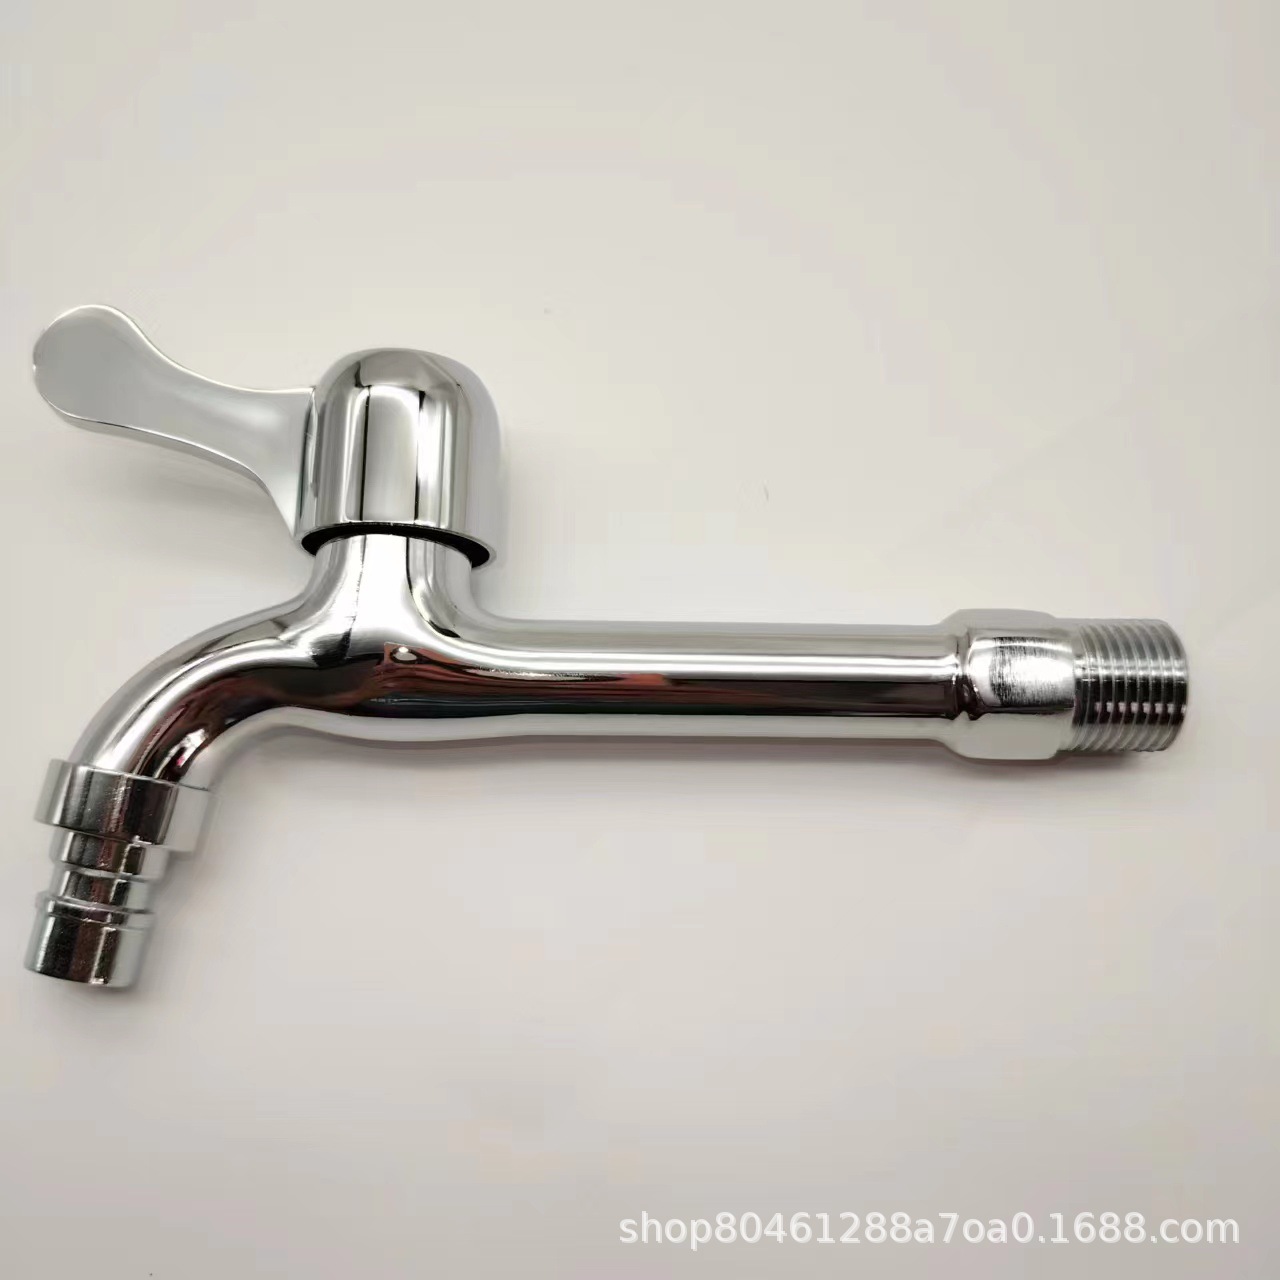 Factory Self-Sold 17cm Lengthened Faucet Quick Opening Faucet Washing Machine Mop Pool Tap Bibcock Water Tap